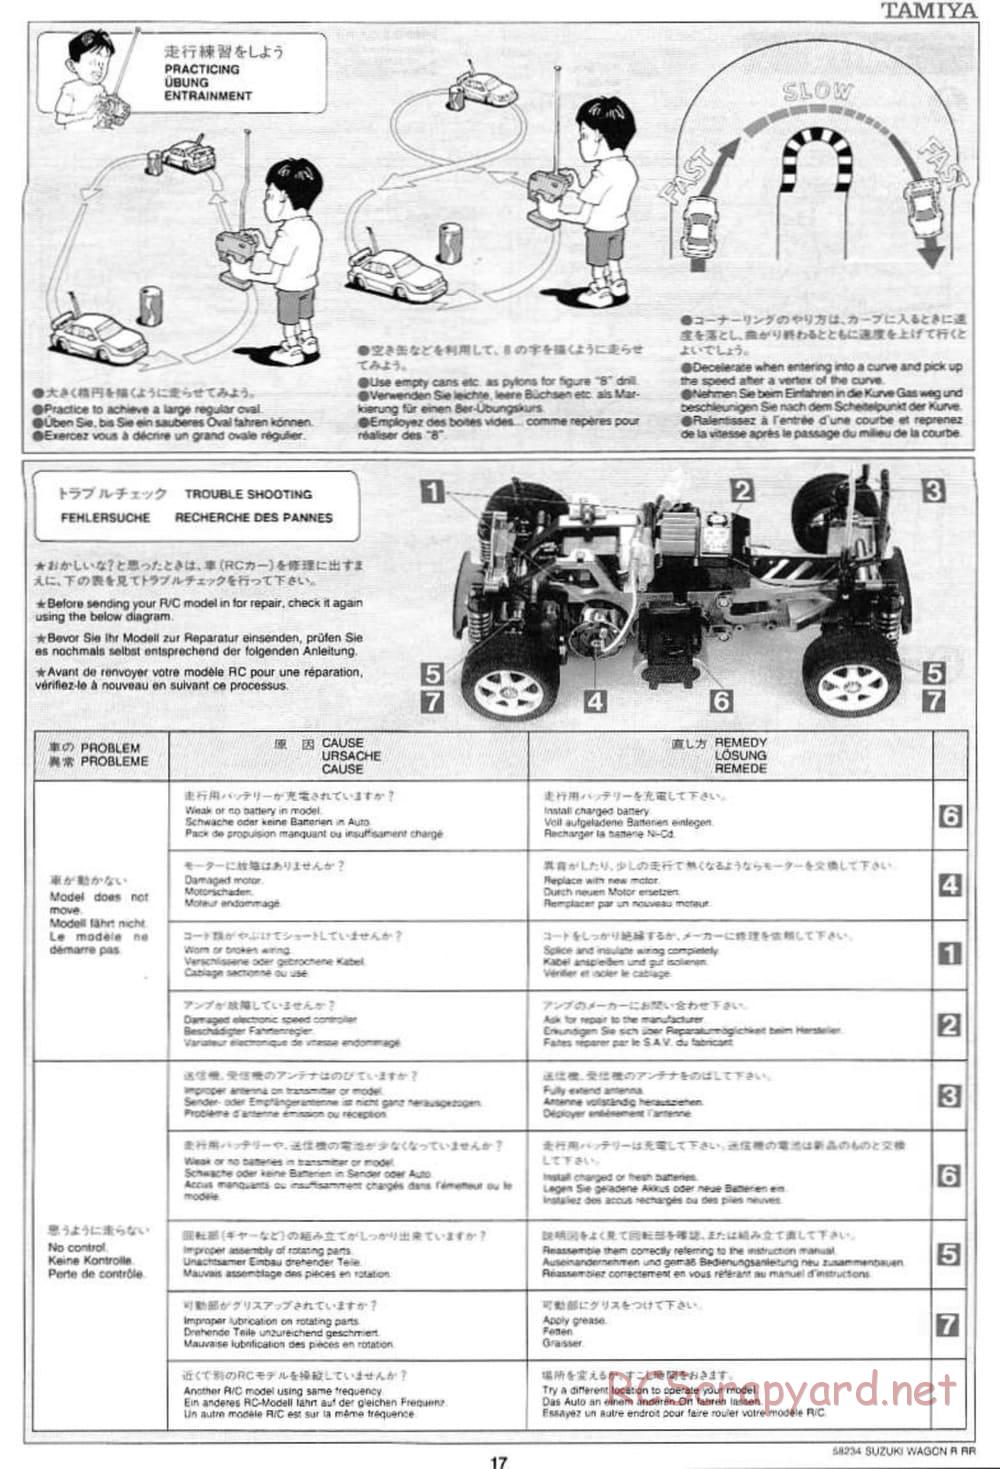 Tamiya - Suzuki WagonR-RR - M03 Chassis - Manual - Page 17